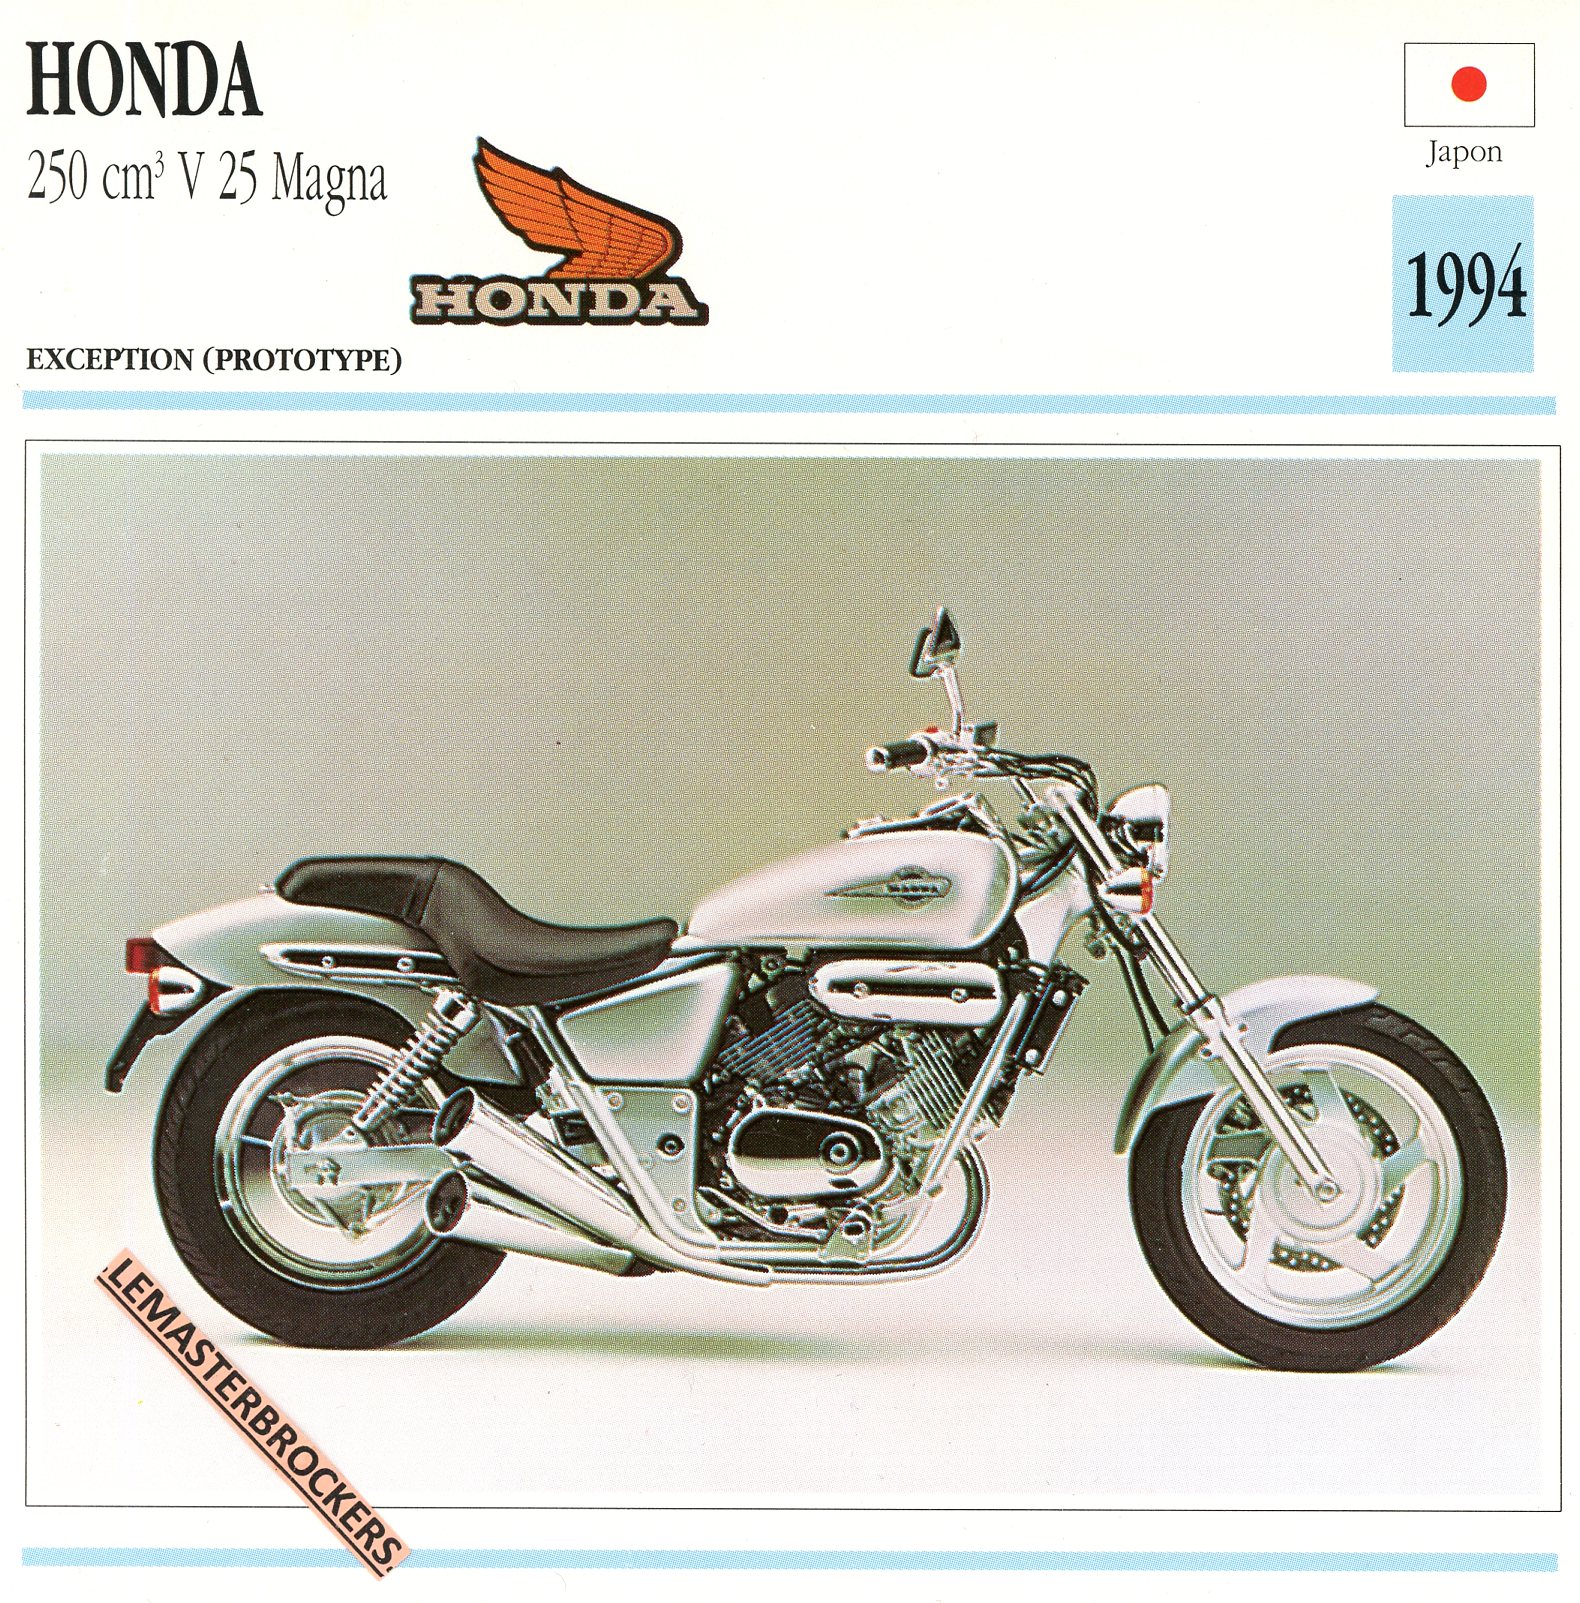 FICHE-MOTO-HONDA-250-V25-MAGNA-1994-LEMASTERBROCKERS-CARS-MOTORCYCLE